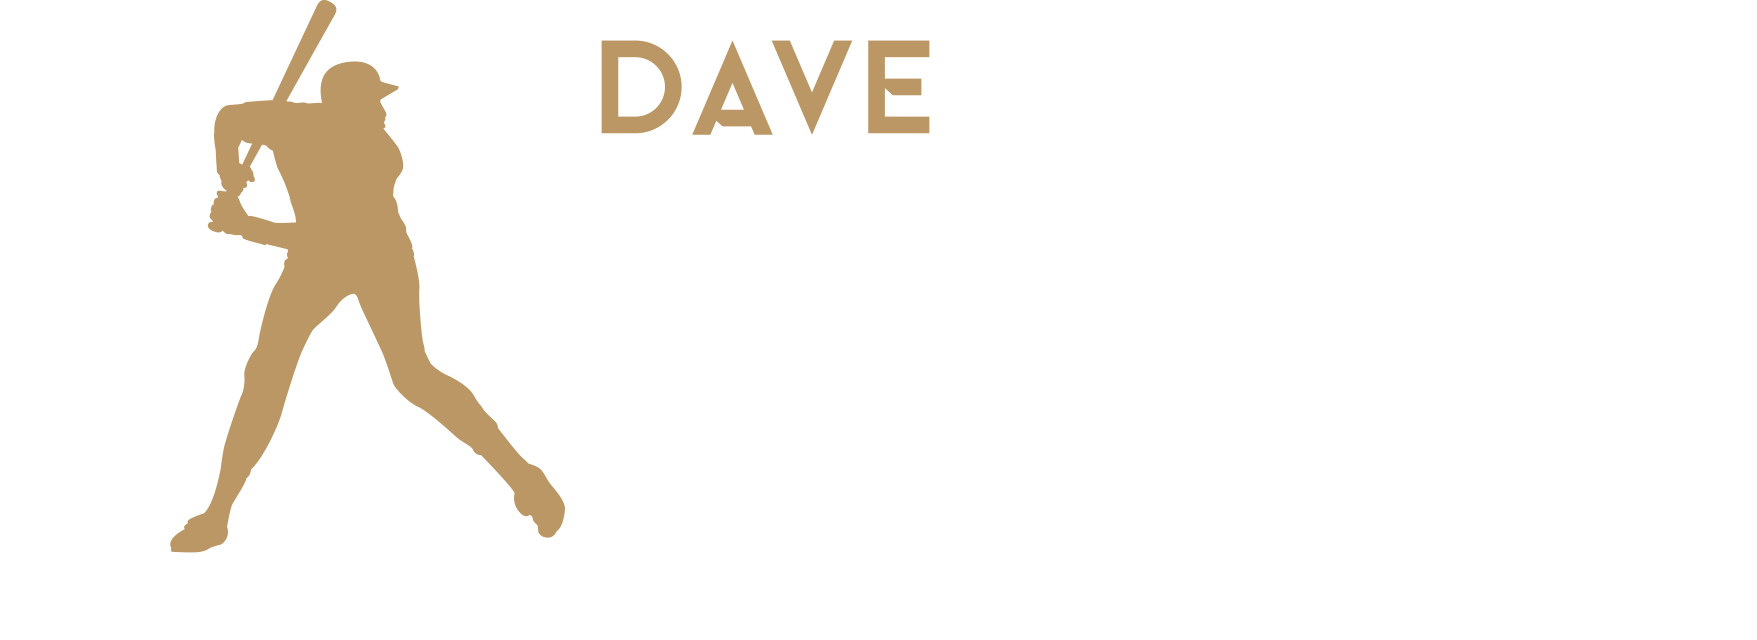 Dave Winfield - M Club Hall of Fame - University of Minnesota Athletics